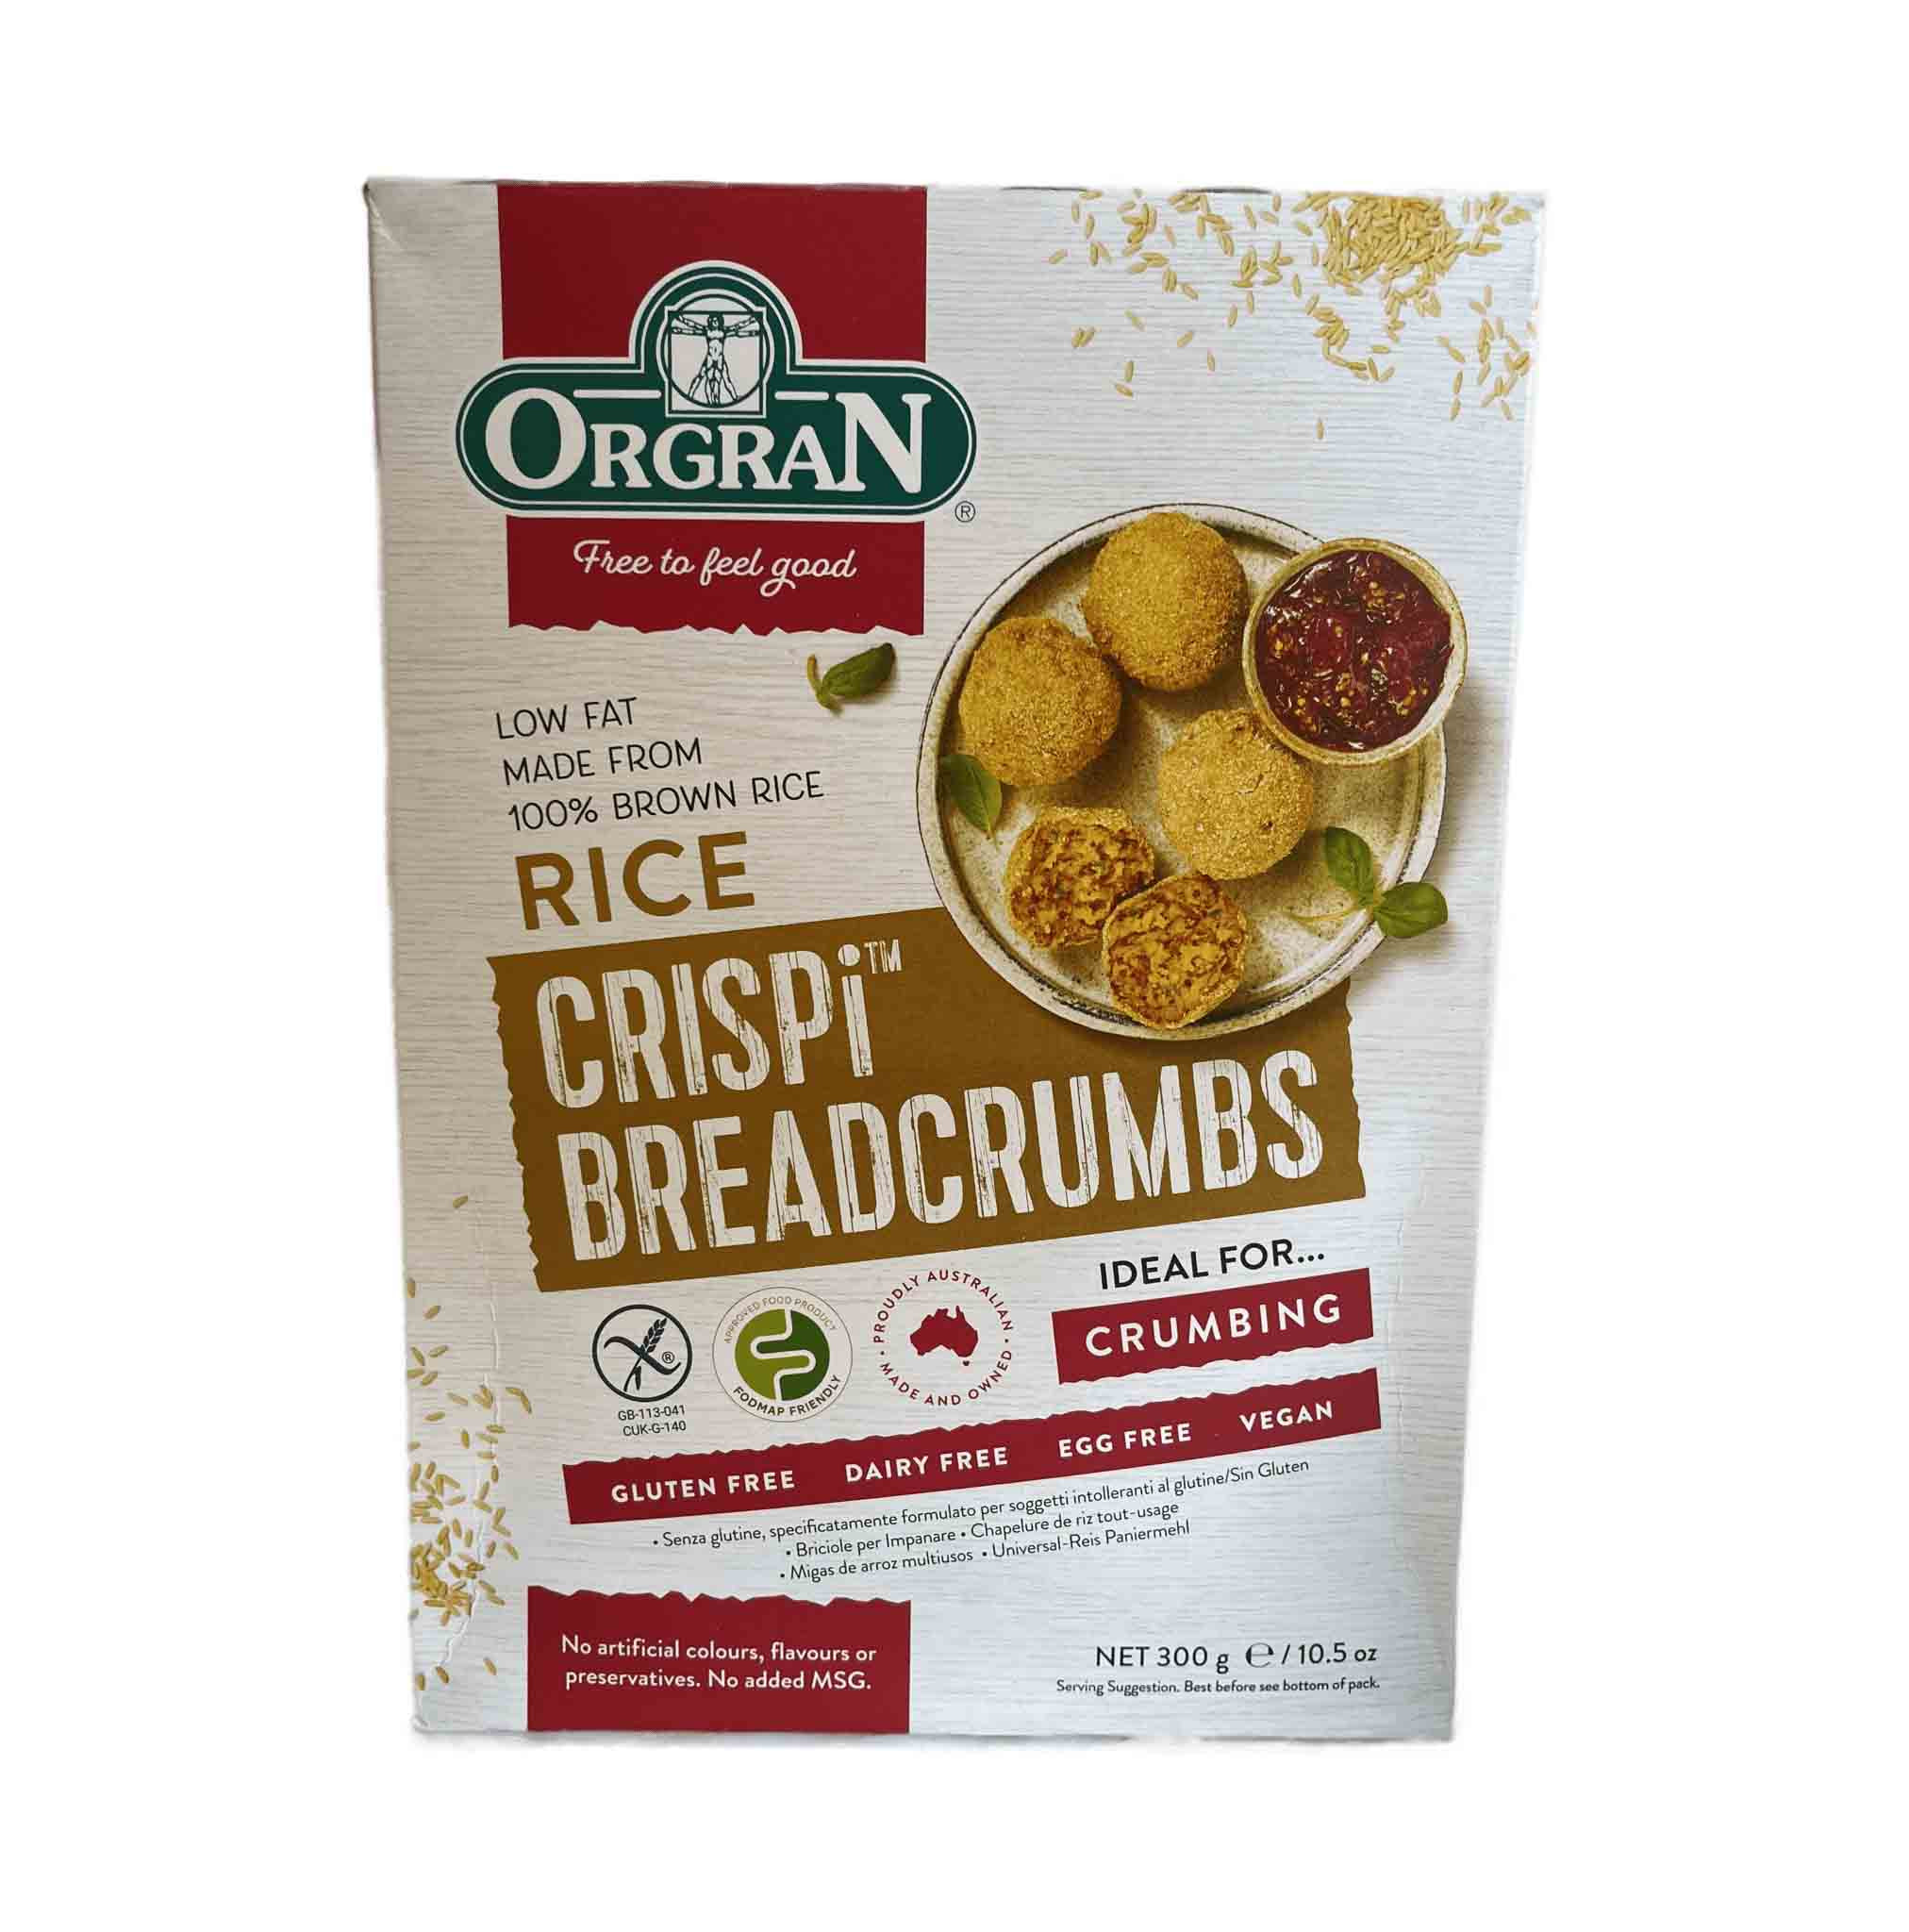 Organ Rice Crisp Breadcrumbs